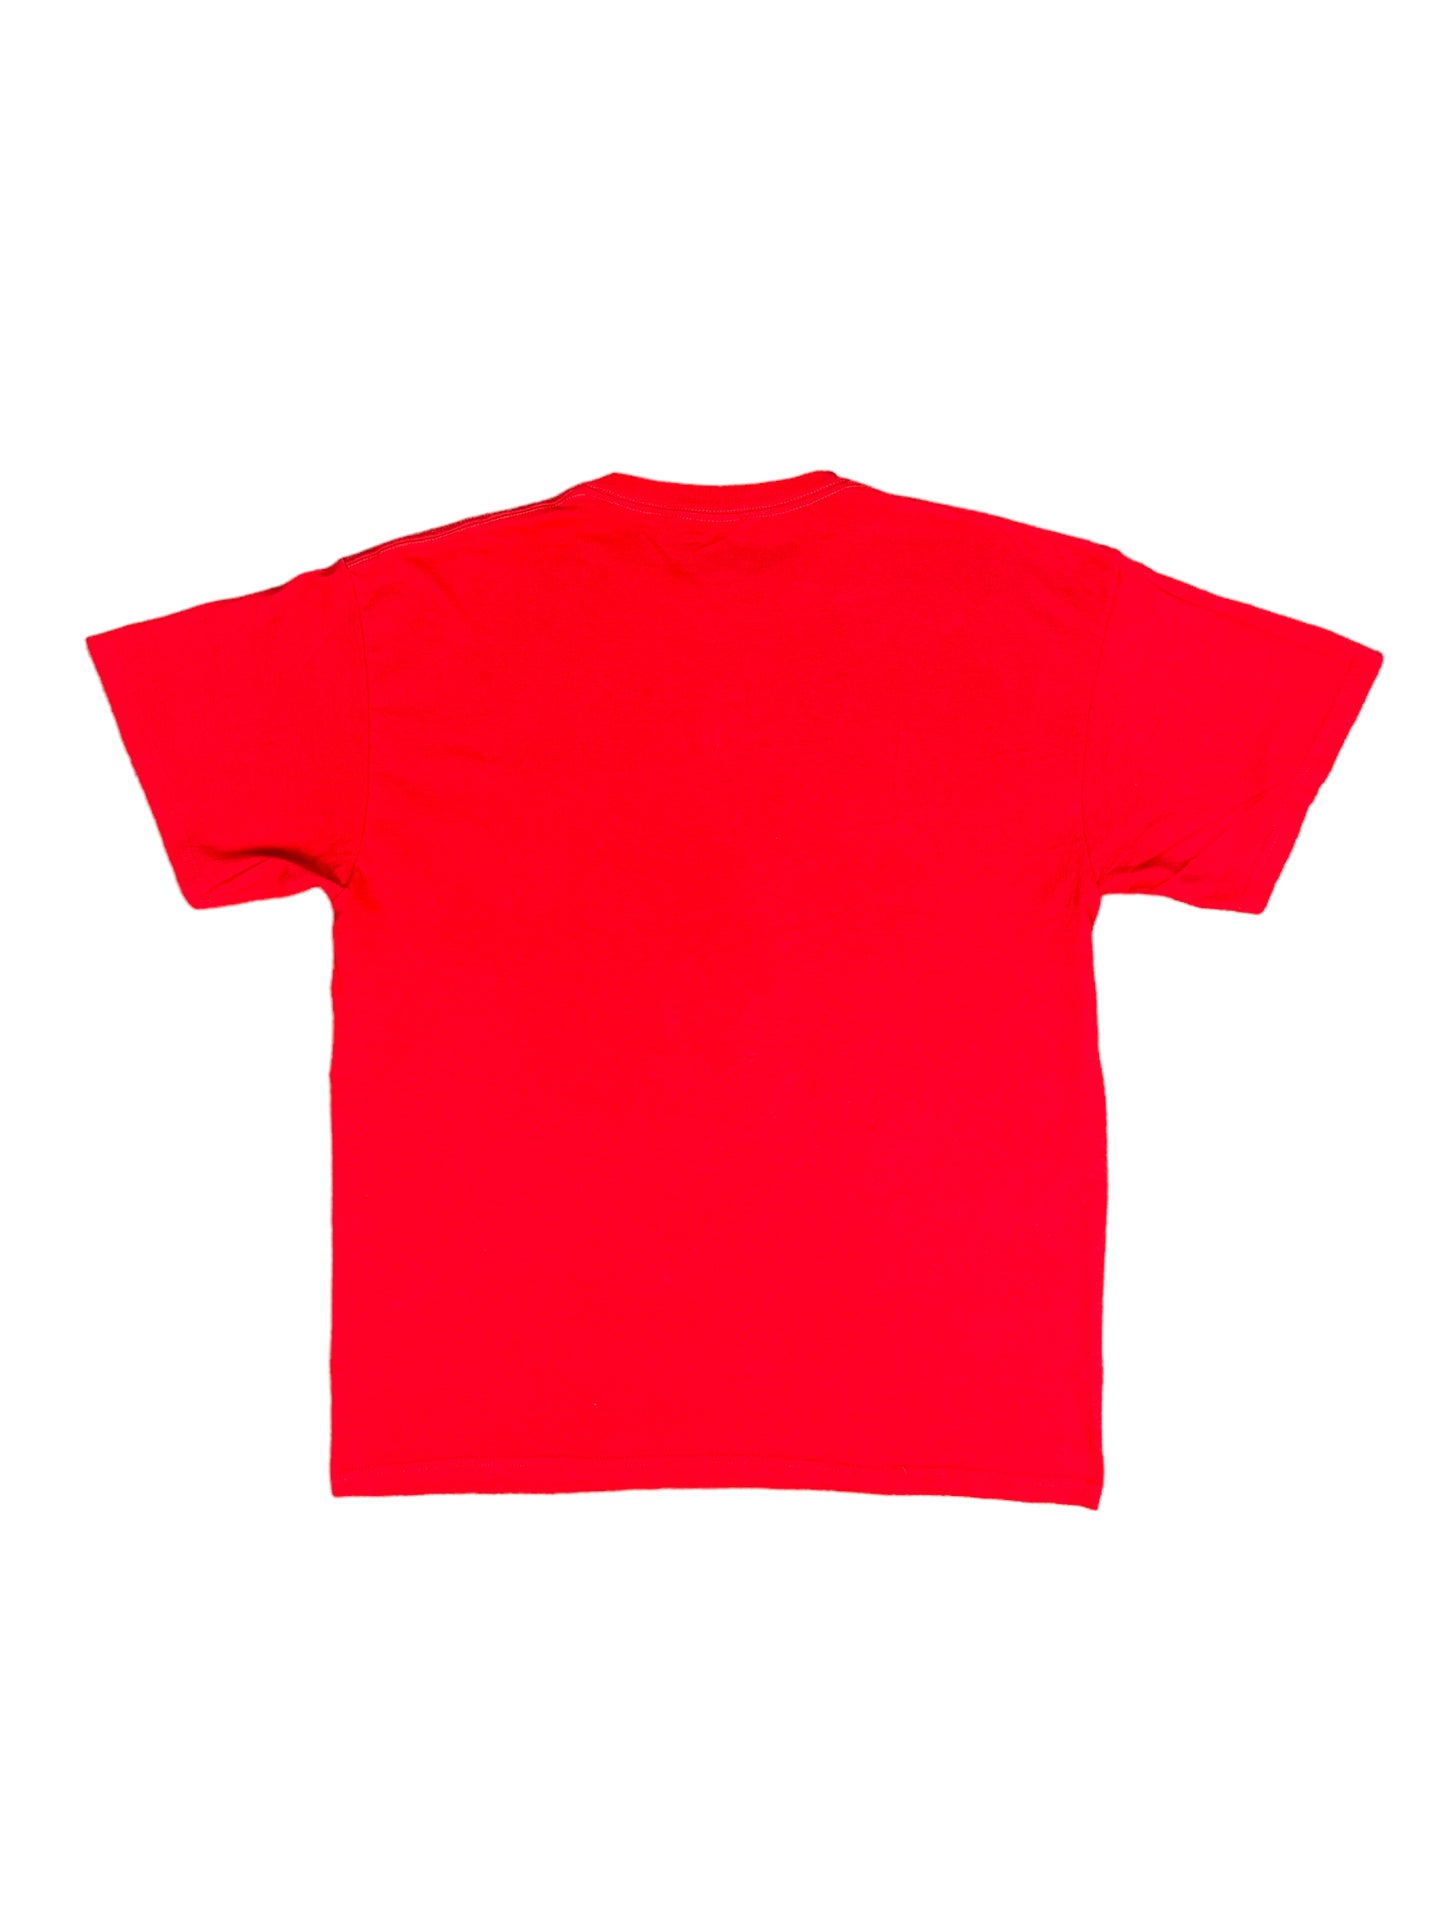 Vintage 00’s Venice Lifeguard T Shirt - XL